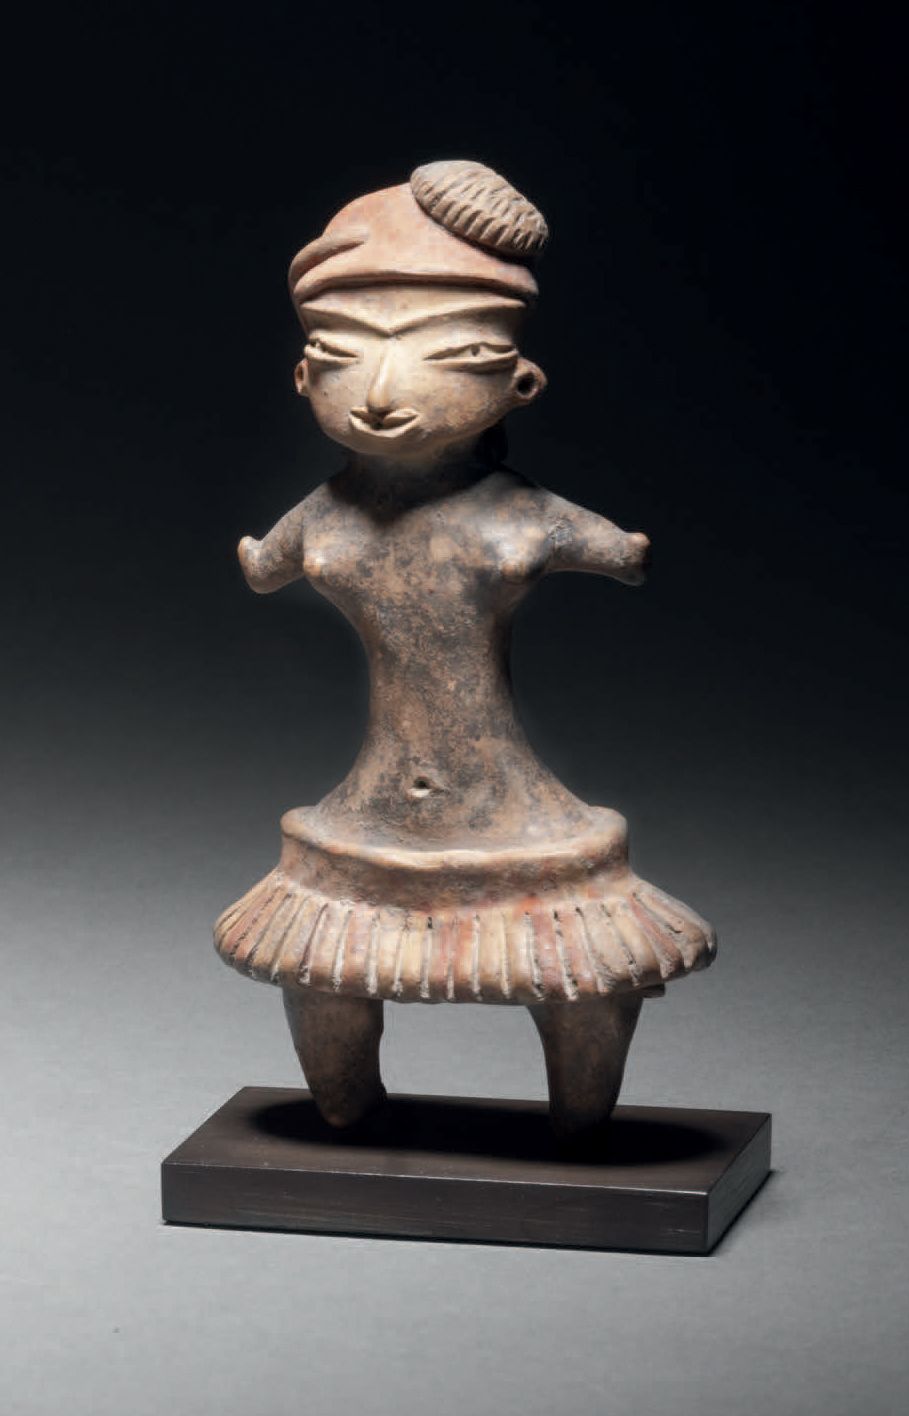 Null VENUS穿裙子 Tlatilco文化，墨西哥谷地，墨西哥
中古时期，公元前1200-900。C.
棕色陶瓷，有红色颜料的痕迹
高10.5厘米
Tla&hellip;